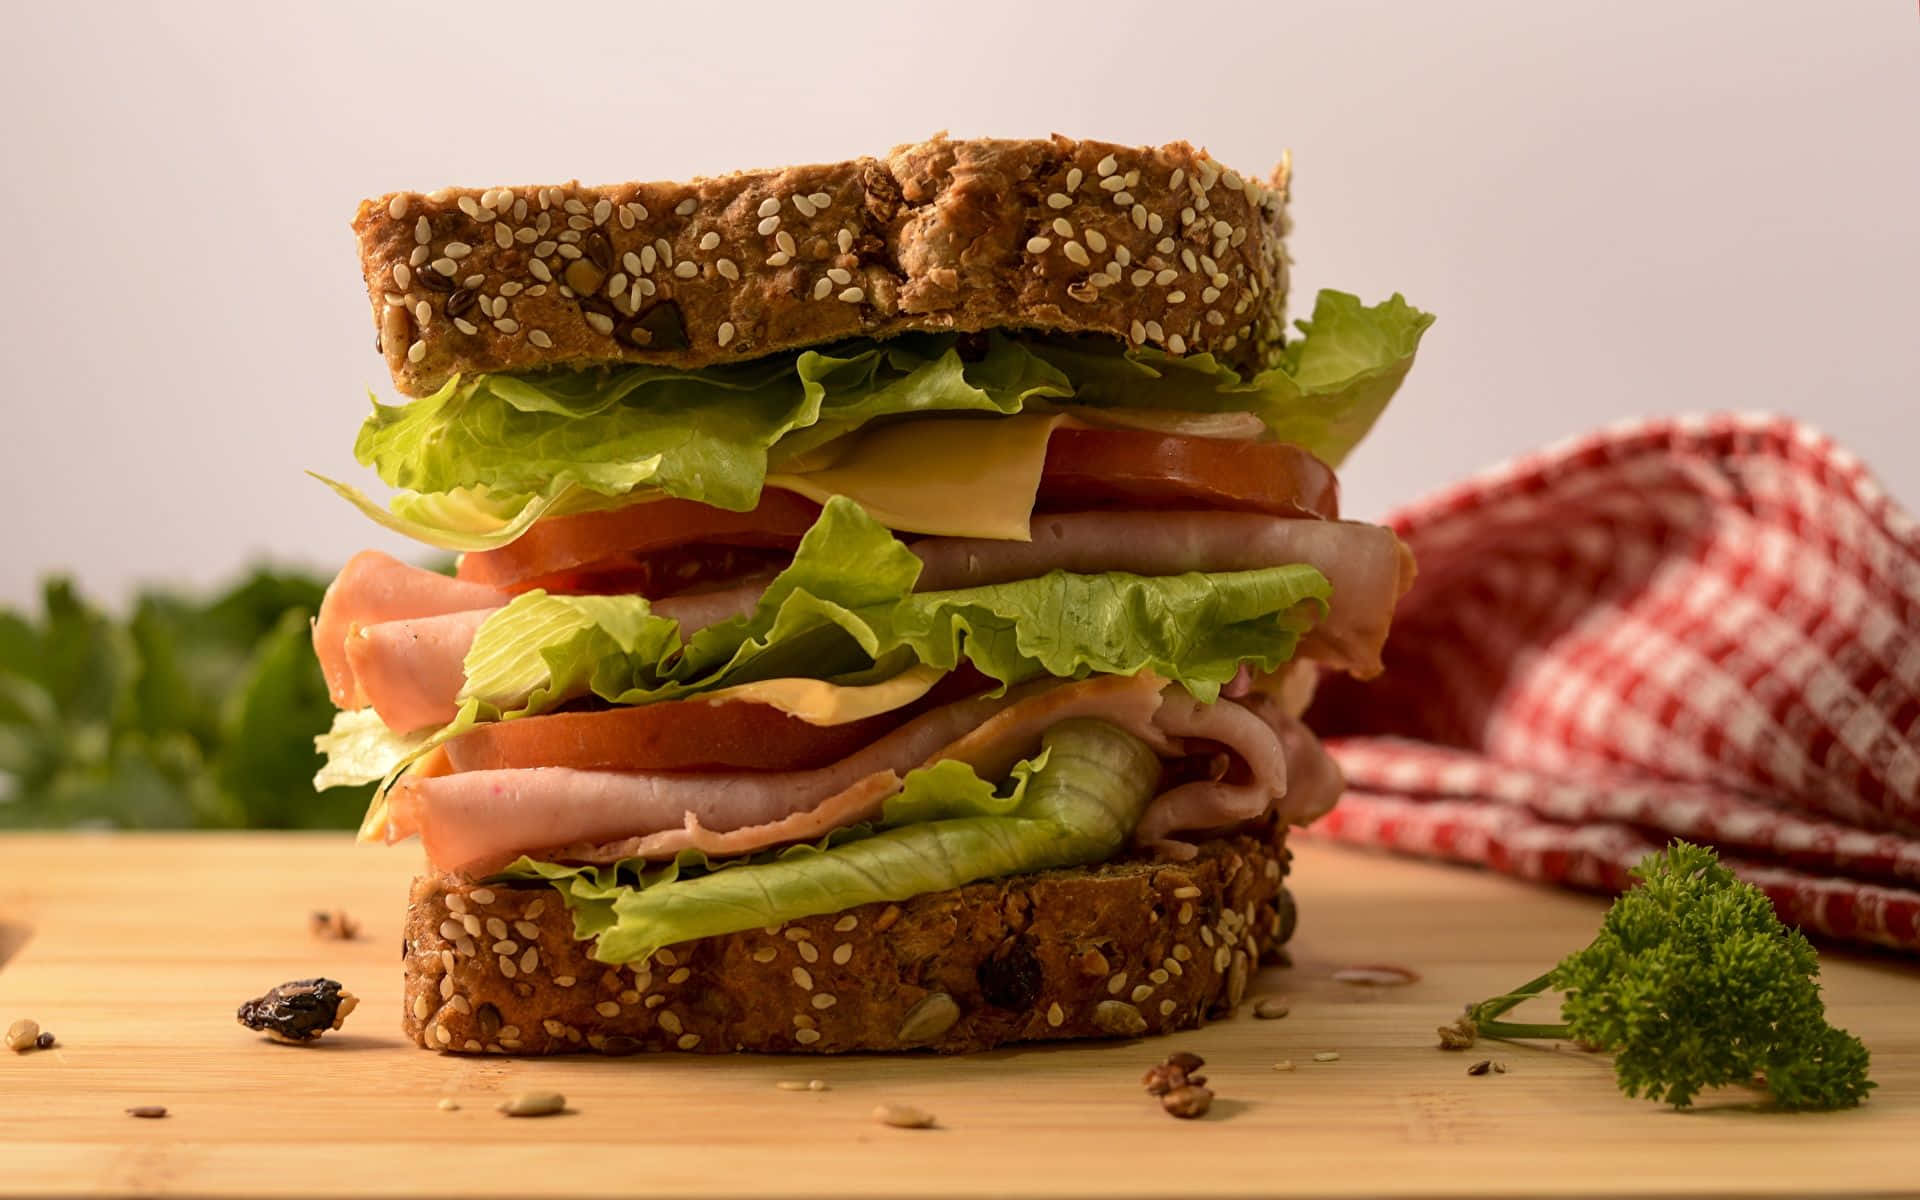 Delicious Deli-style Sandwich Showcasing Fresh Ingredients